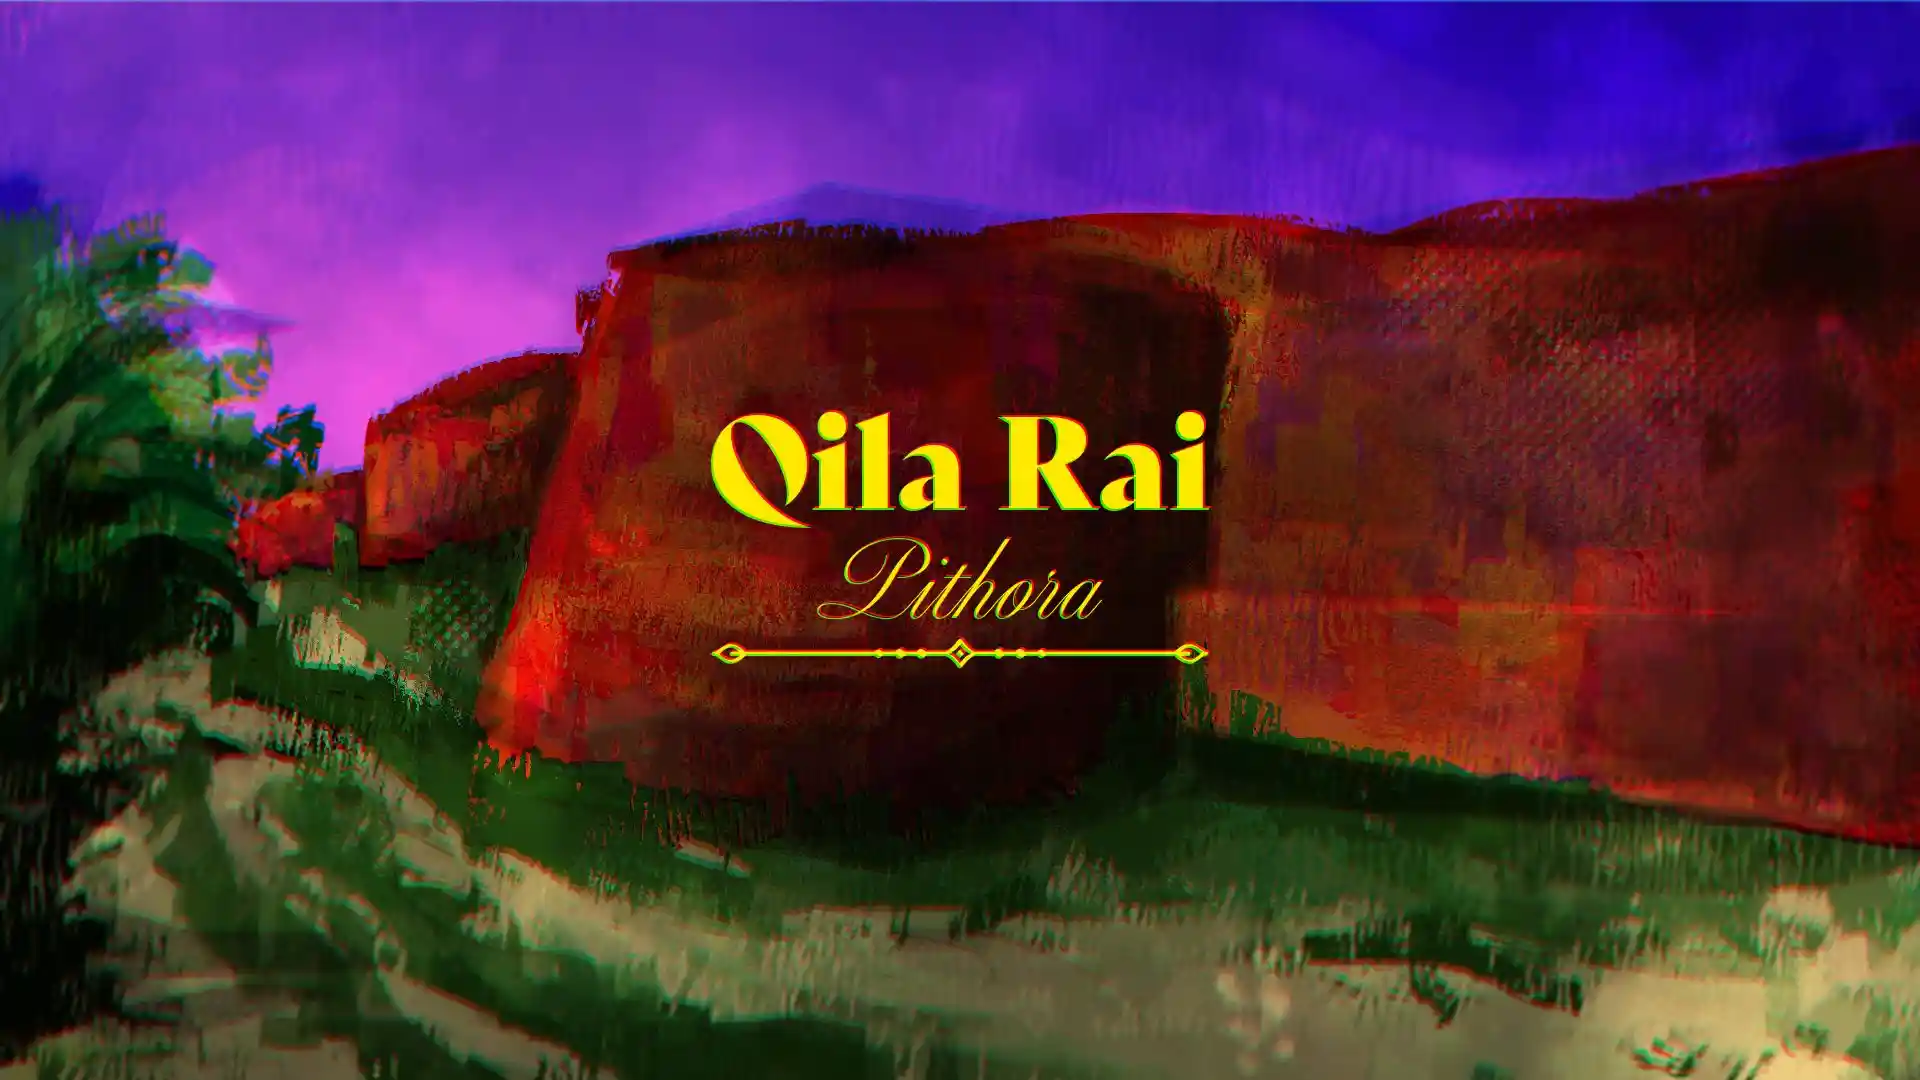 Qila Rai Pithora illustrated